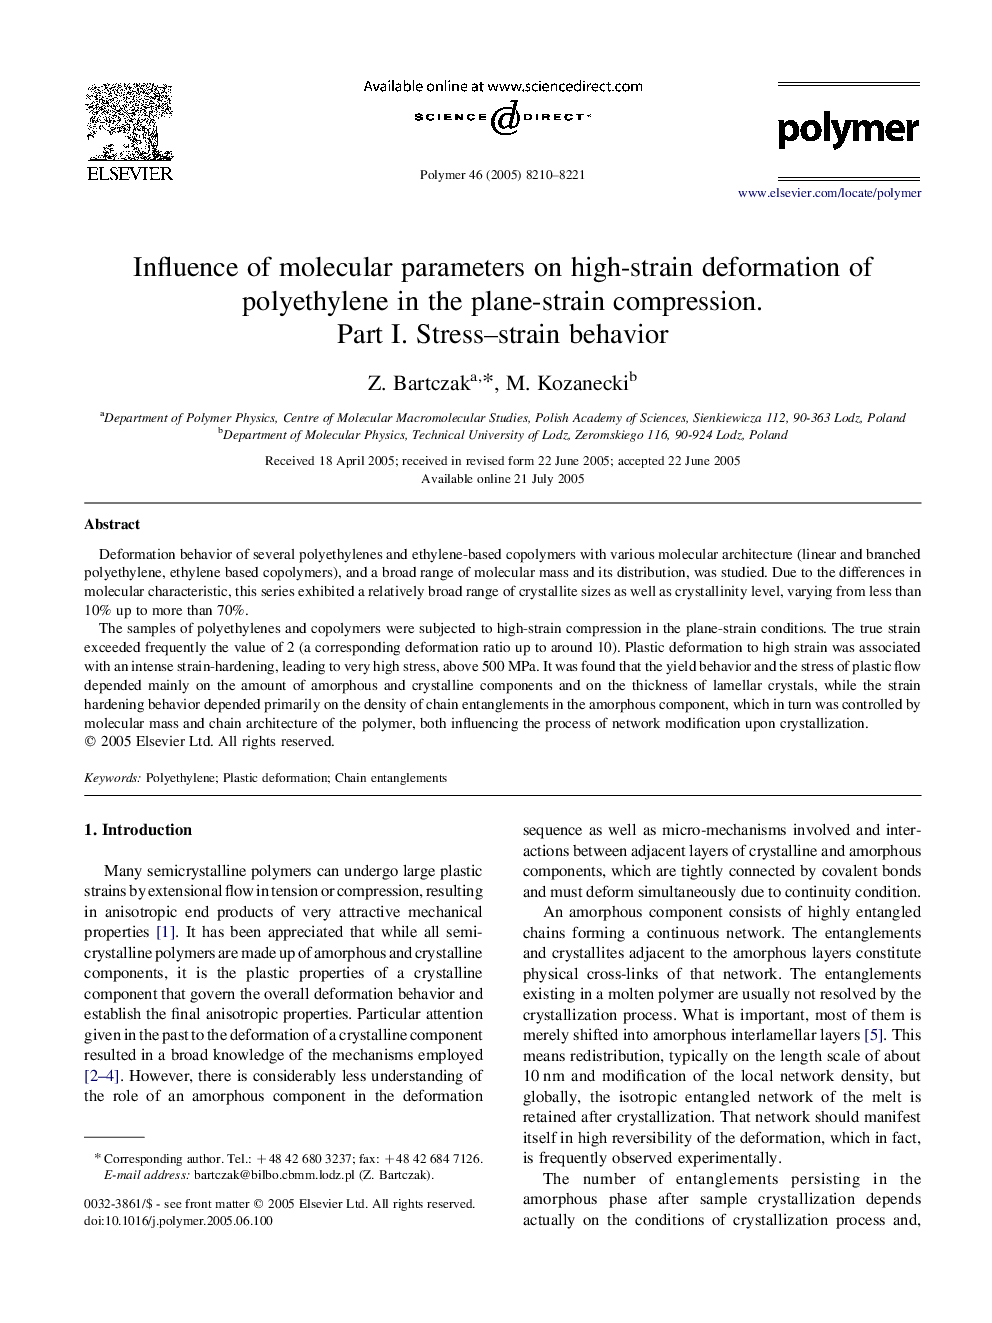 Influence of molecular parameters on high-strain deformation of polyethylene in the plane-strain compression. Part I. Stress-strain behavior